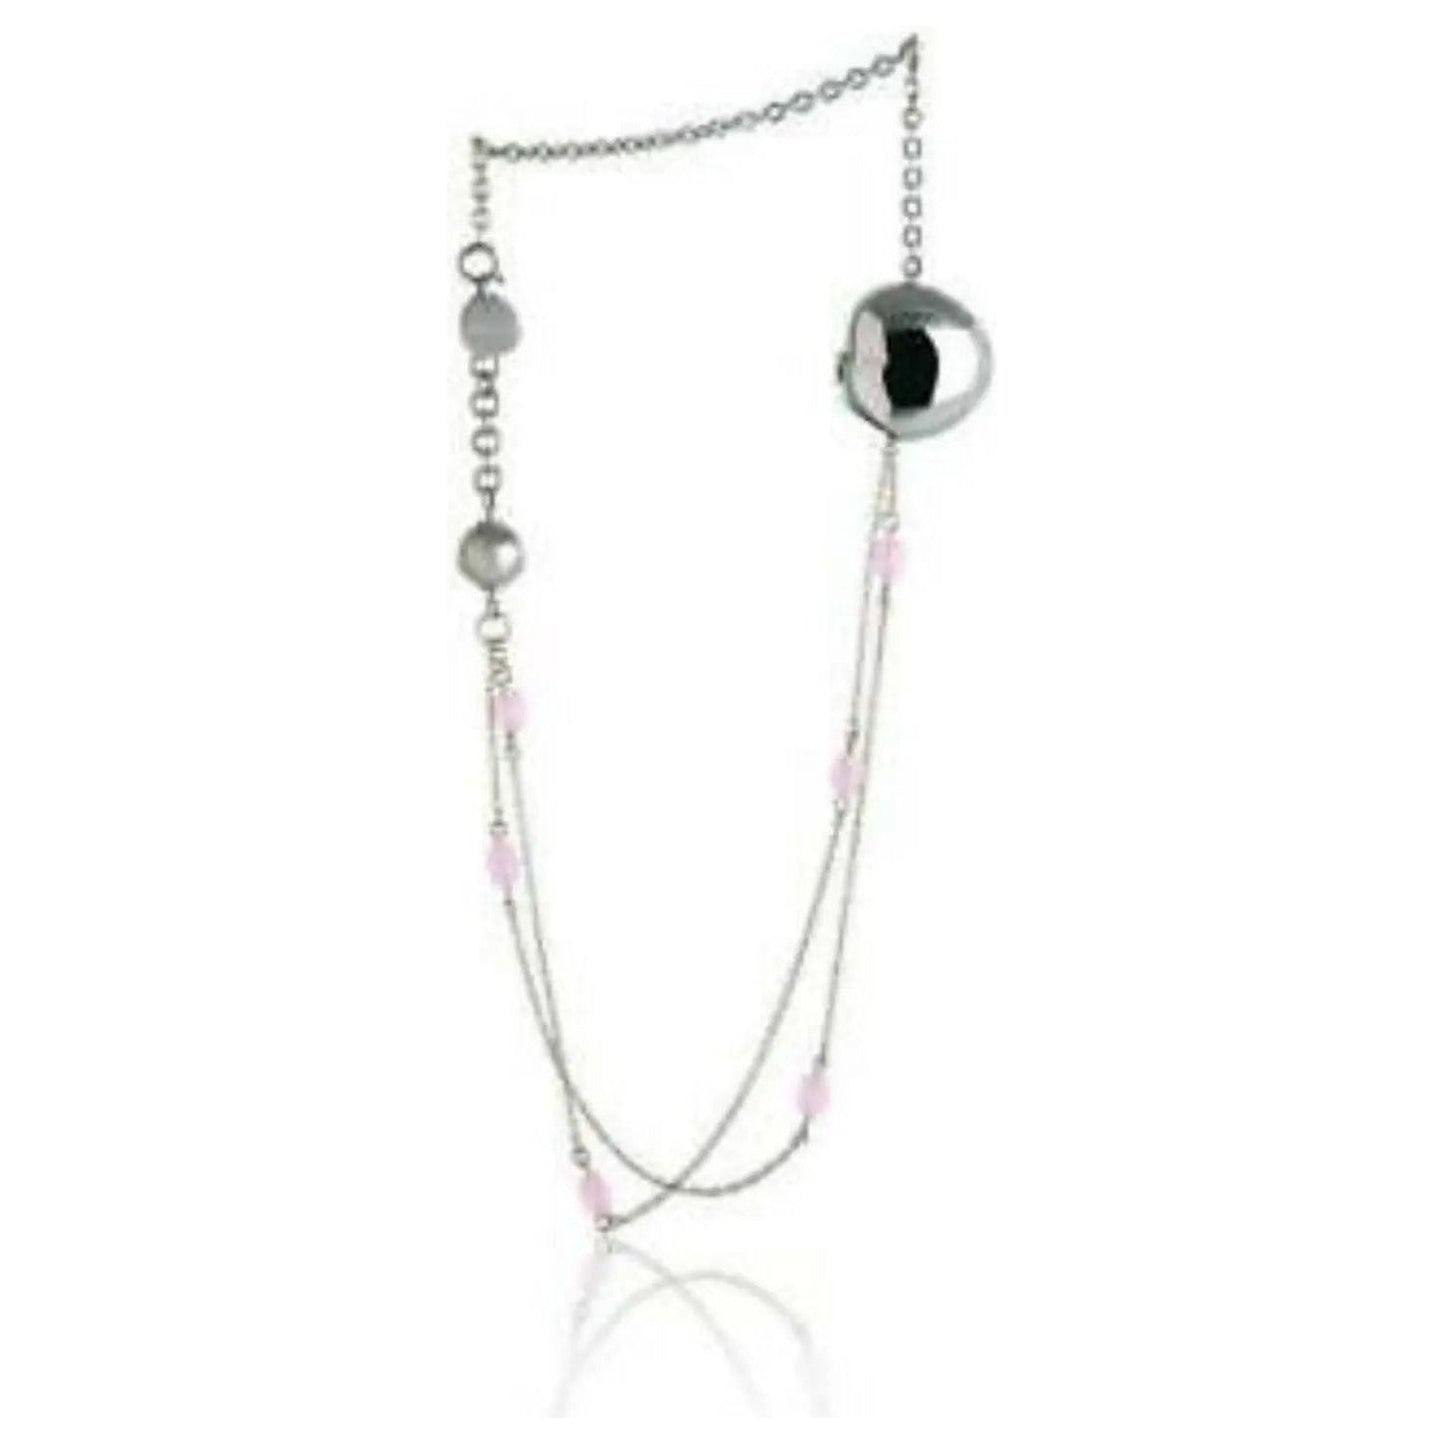 BREIL GIOIELLIBREIL JEWELS BLOOM Collection- 2 in 1 : Bracciale - Collana / Bracelet - Necklace 19cmMcRichard Designer Brands£107.00